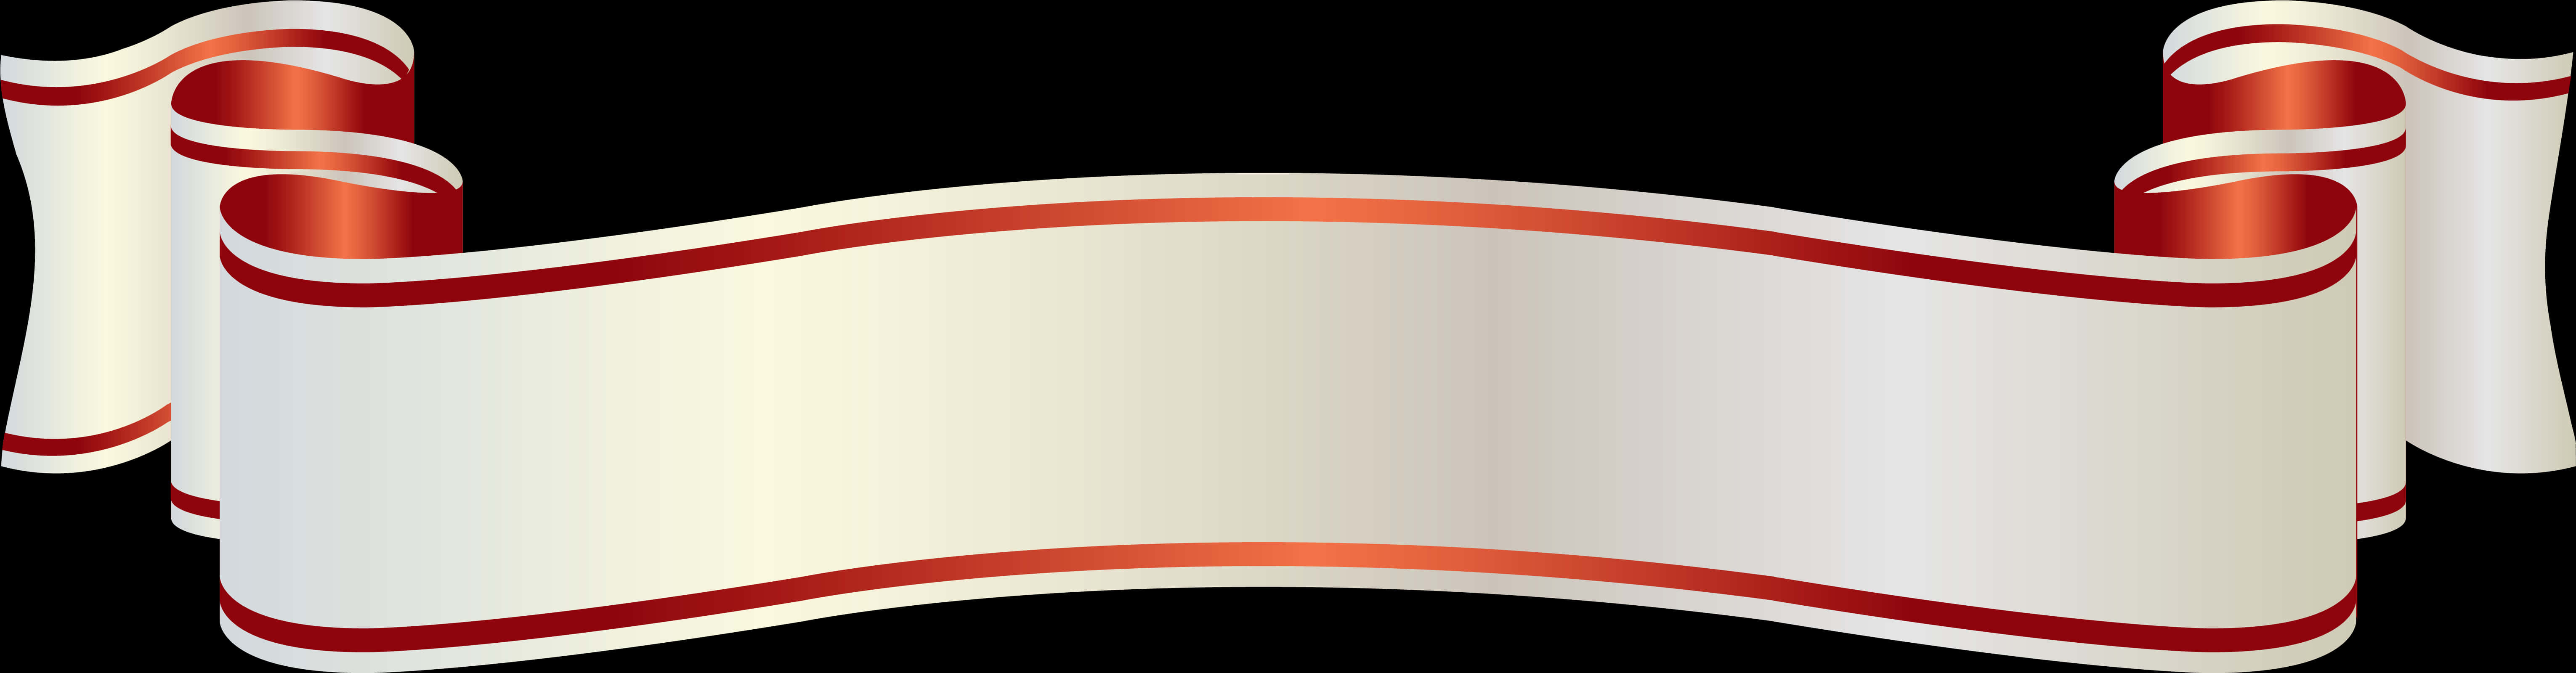 Elegant Redand White Ribbon Banner PNG